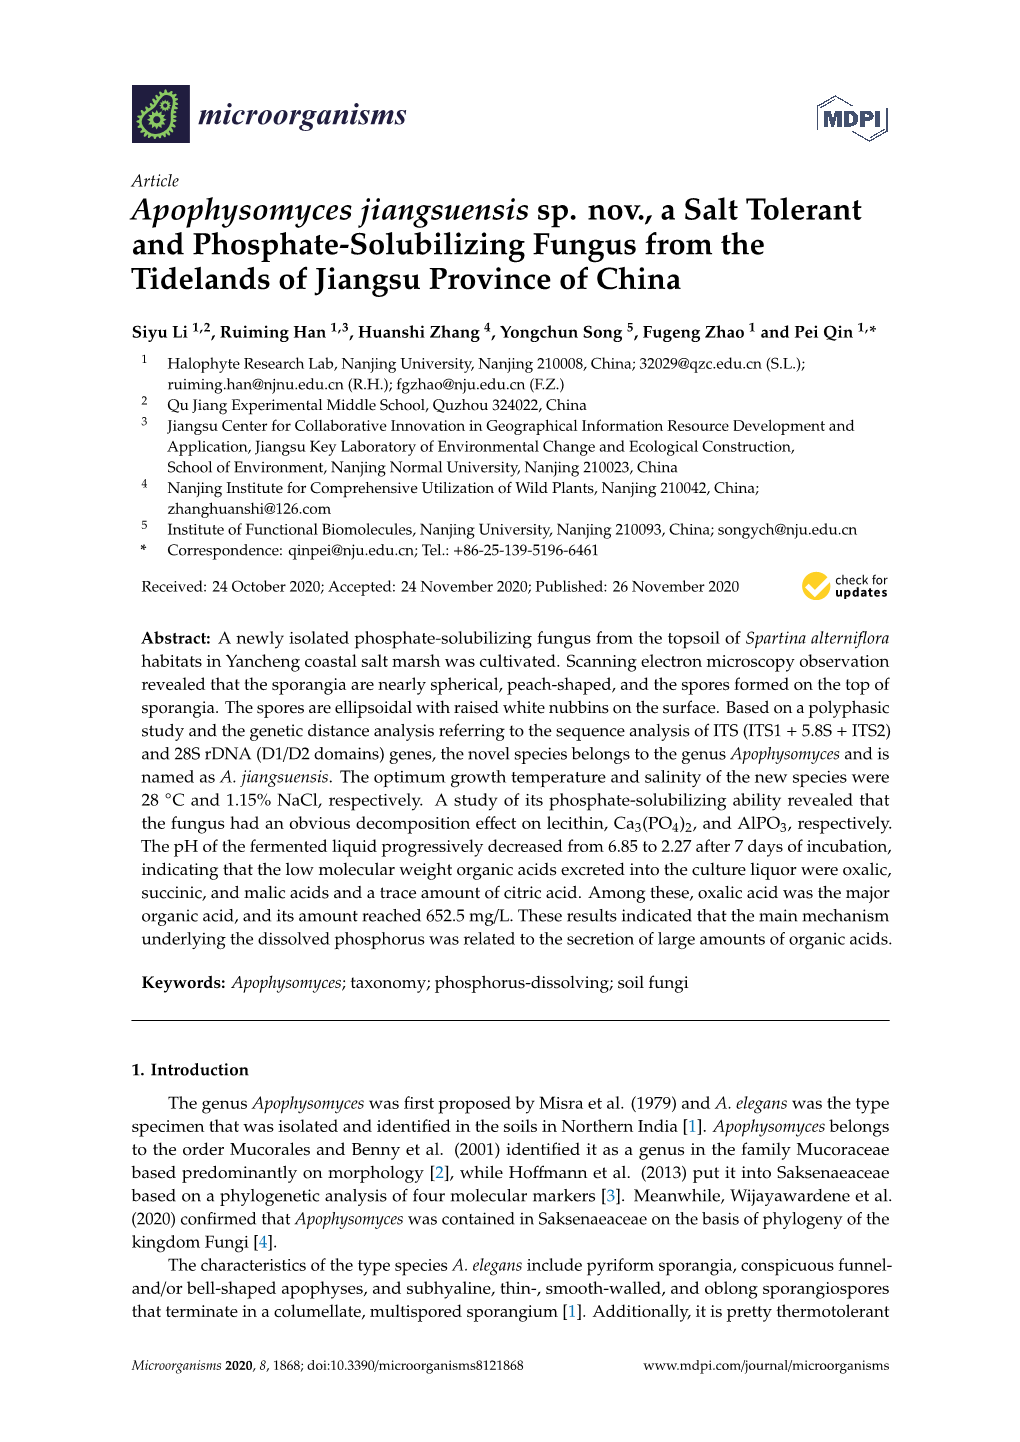 Apophysomyces Jiangsuensis Sp. Nov., a Salt Tolerant and Phosphate-Solubilizing Fungus from the Tidelands of Jiangsu Province of China